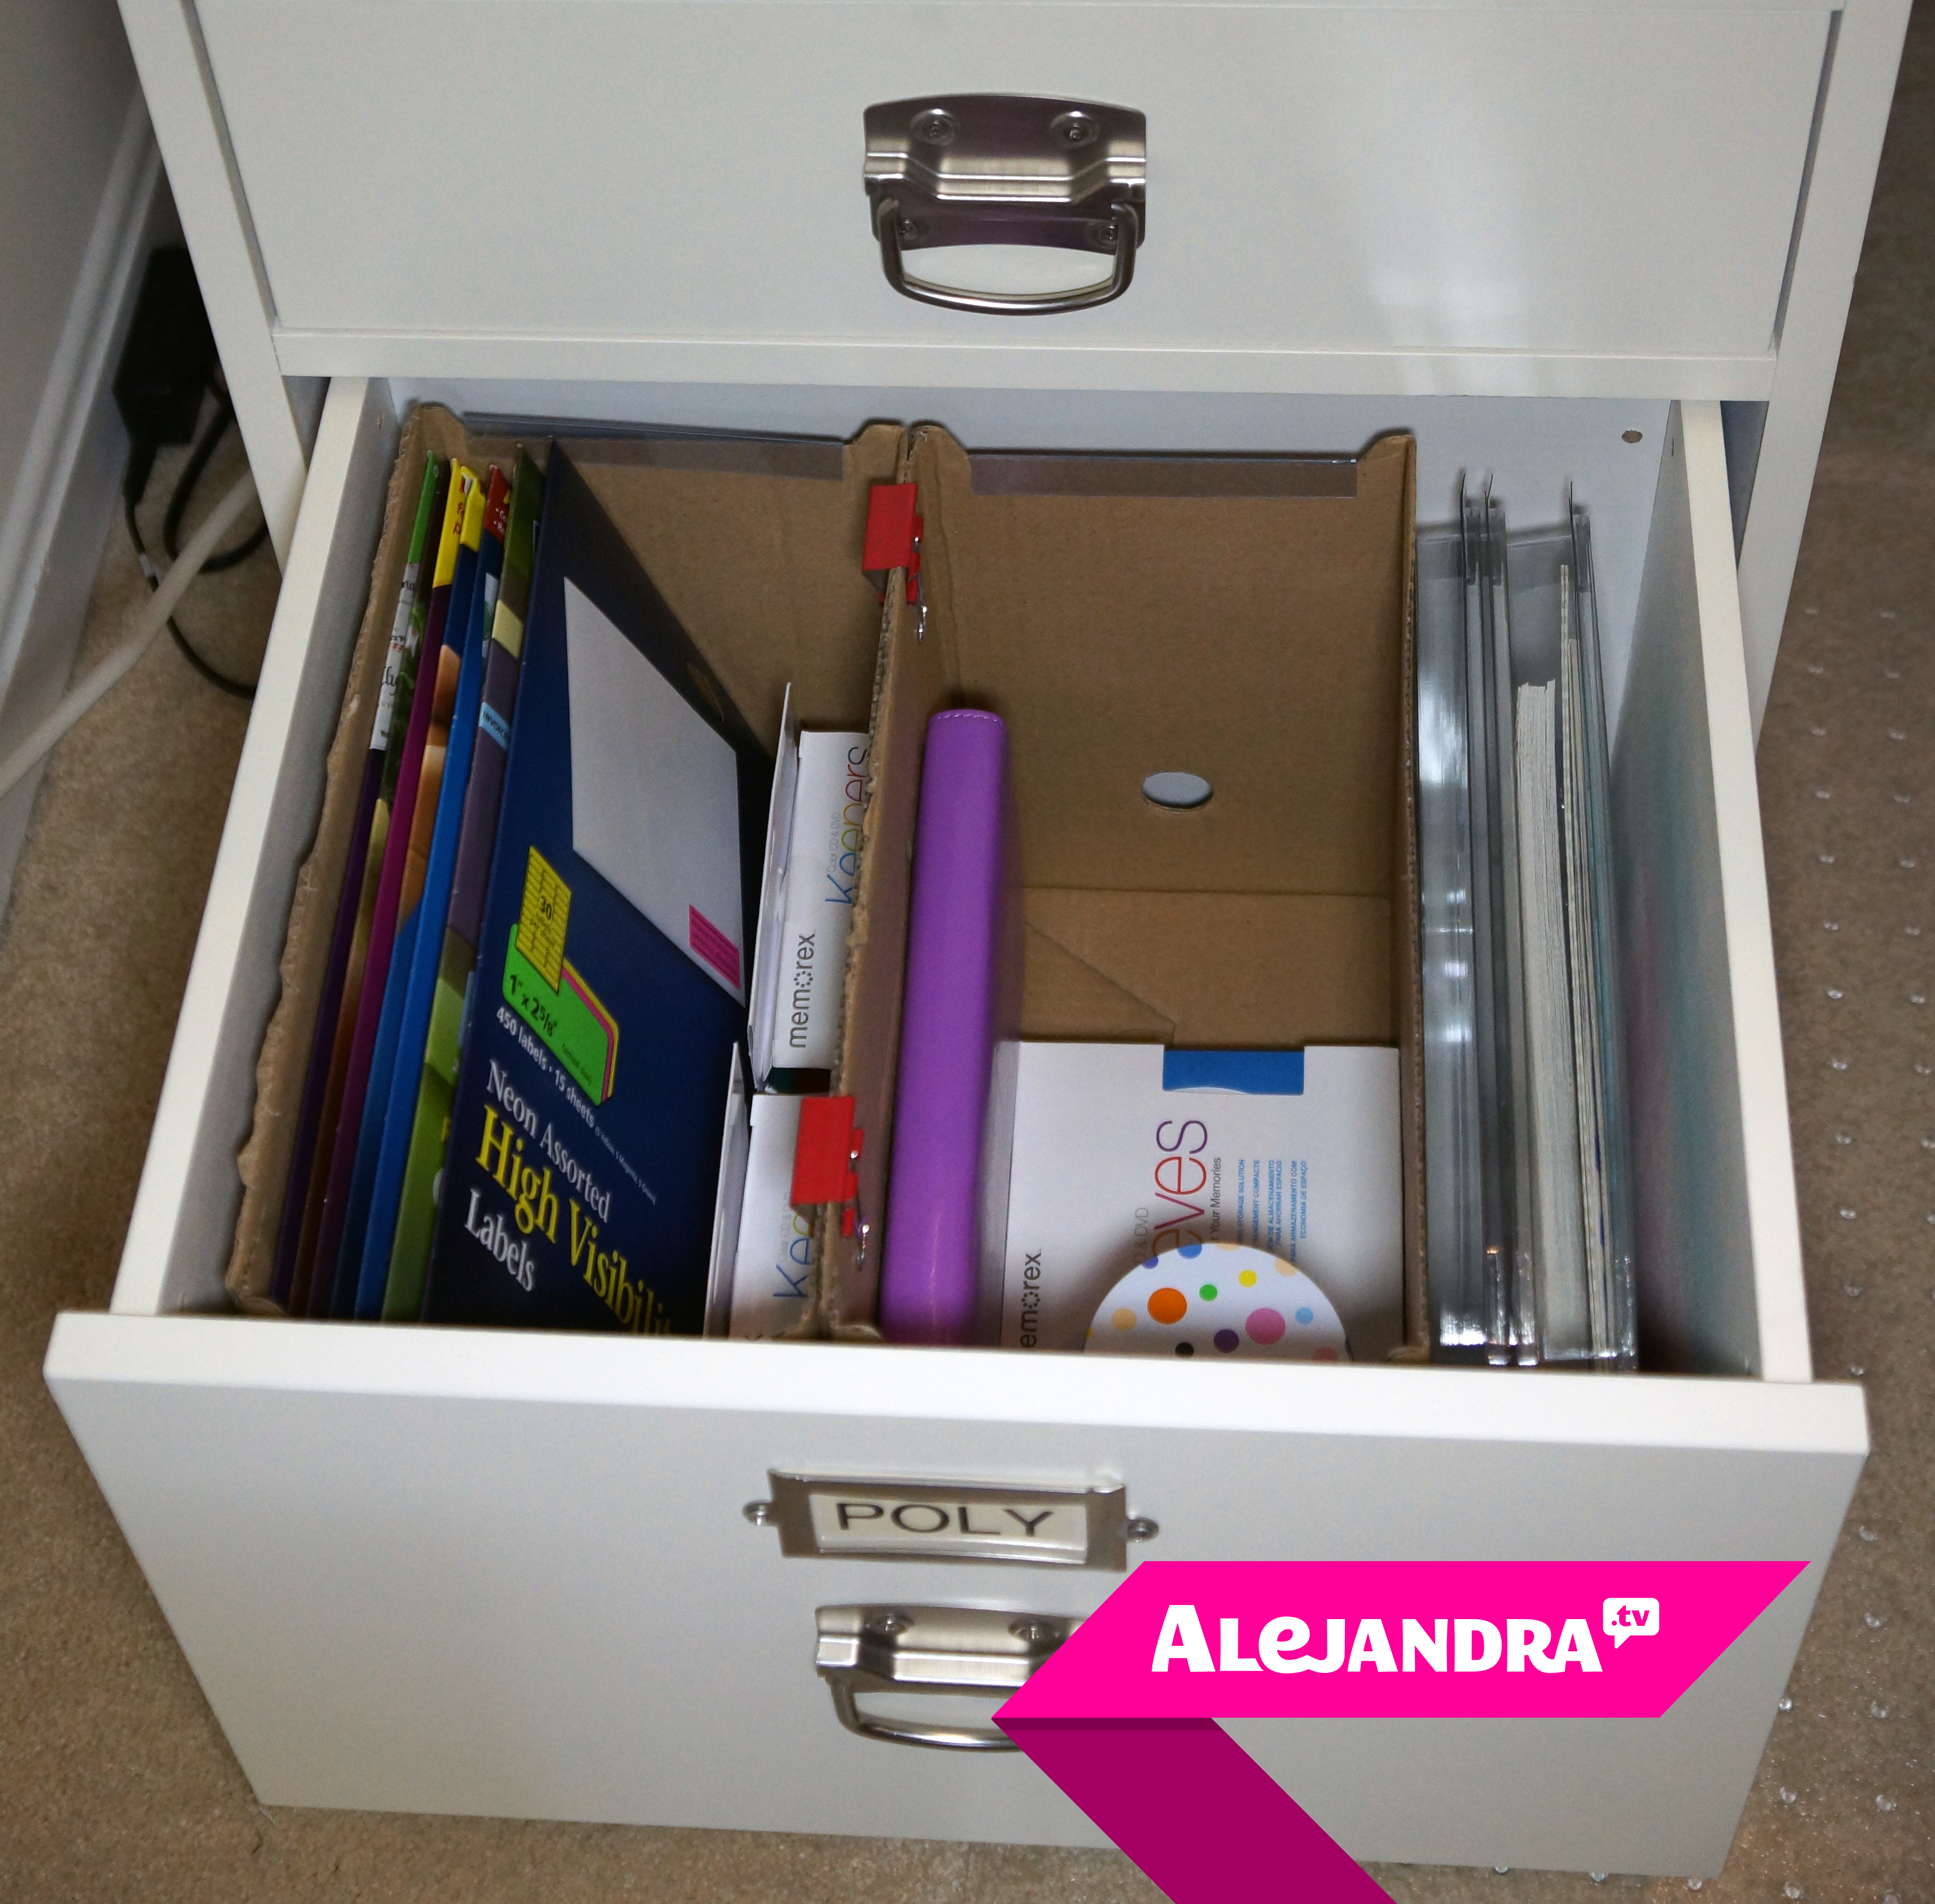 https://www.alejandra.tv/wp-content/uploads/2015/02/Budget-Desk-Organization-Drawer-Organizer-Boxes2.jpg